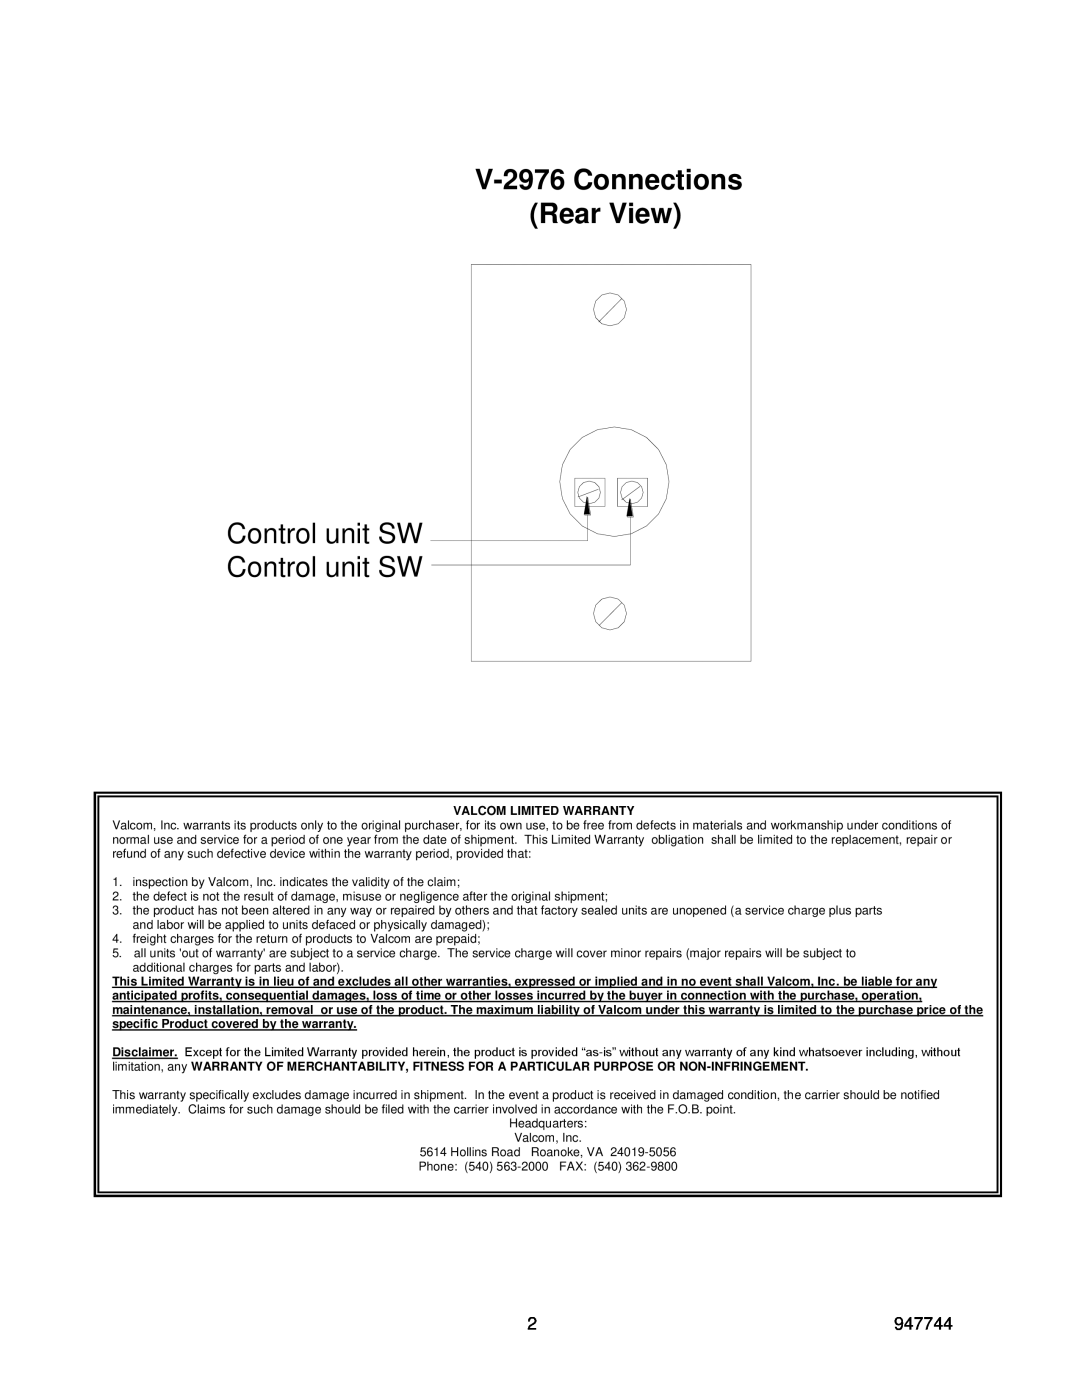 Valcom dimensions V-2976Connections Rear View, Control unit SW Control unit SW 